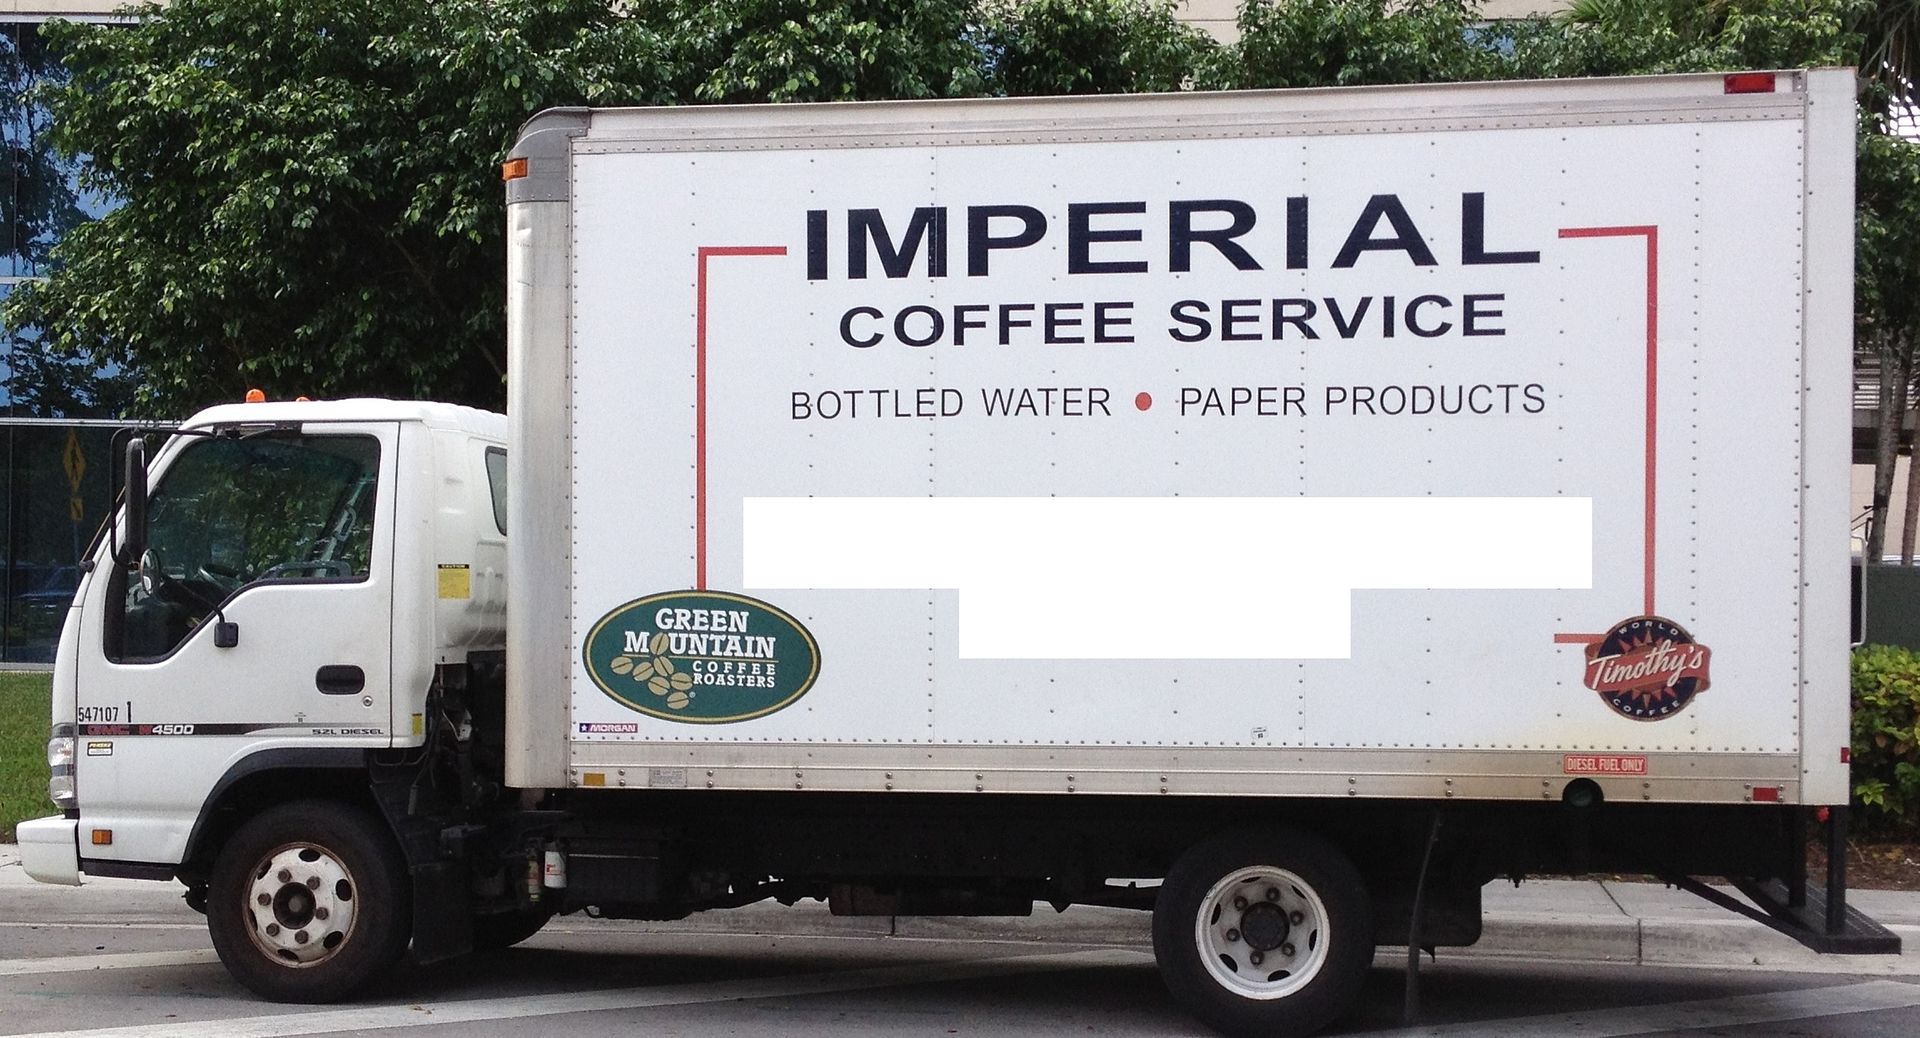 Imperialcoffee.jpg